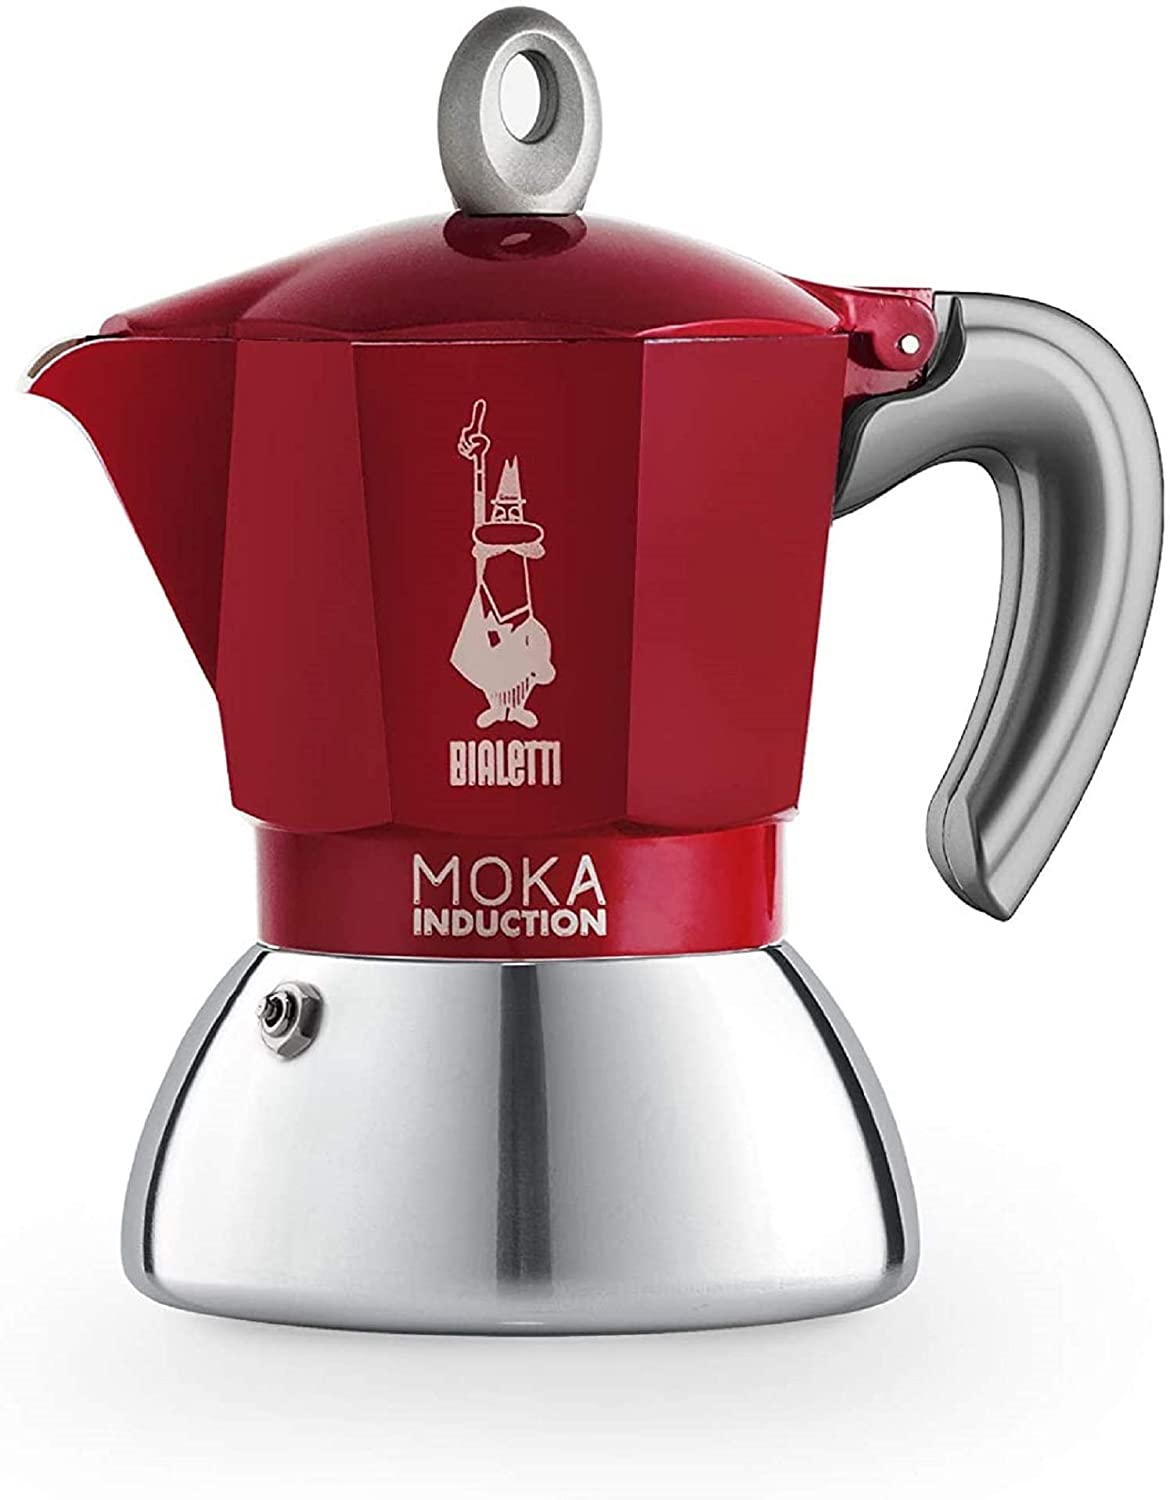 Bialetti New Moka Induction Coffee Maker